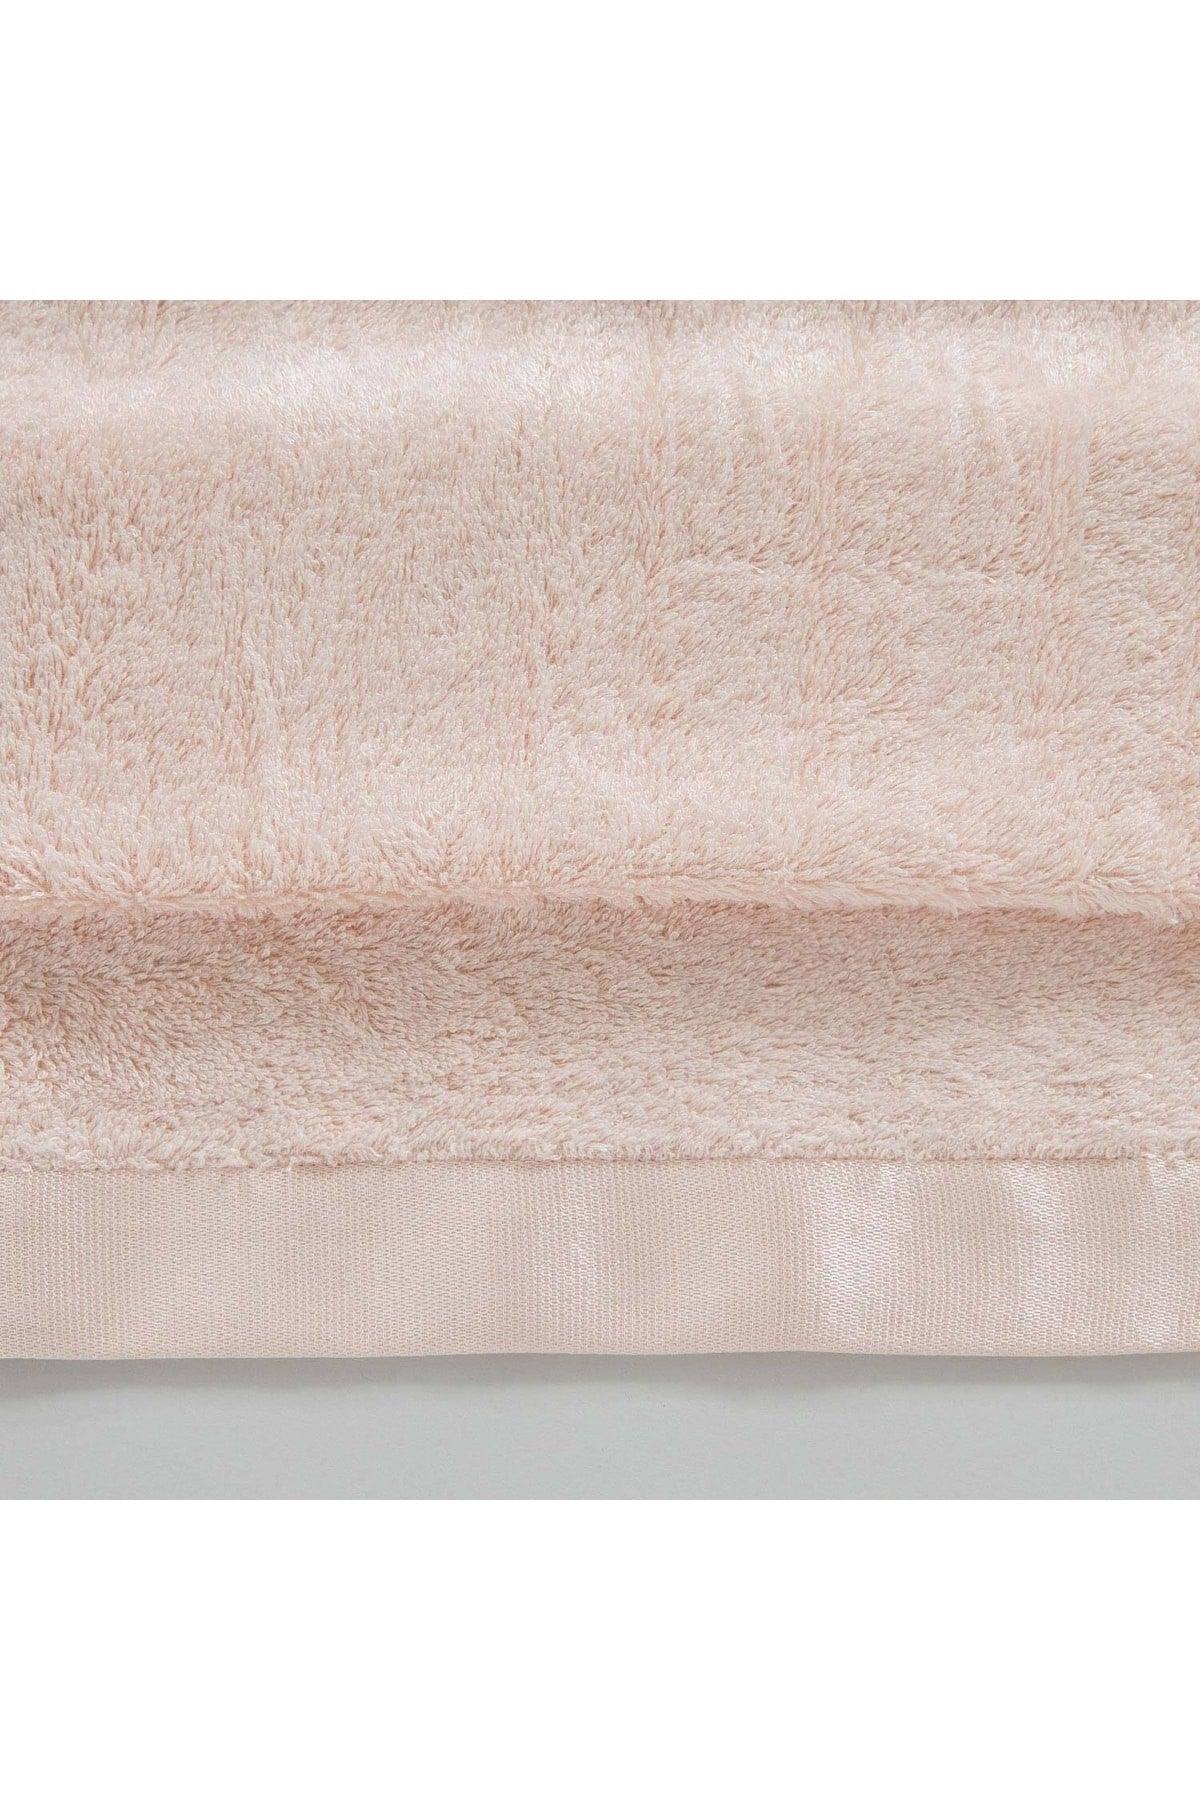 Floss Face Towel 50x90 Cm Puppy - Swordslife